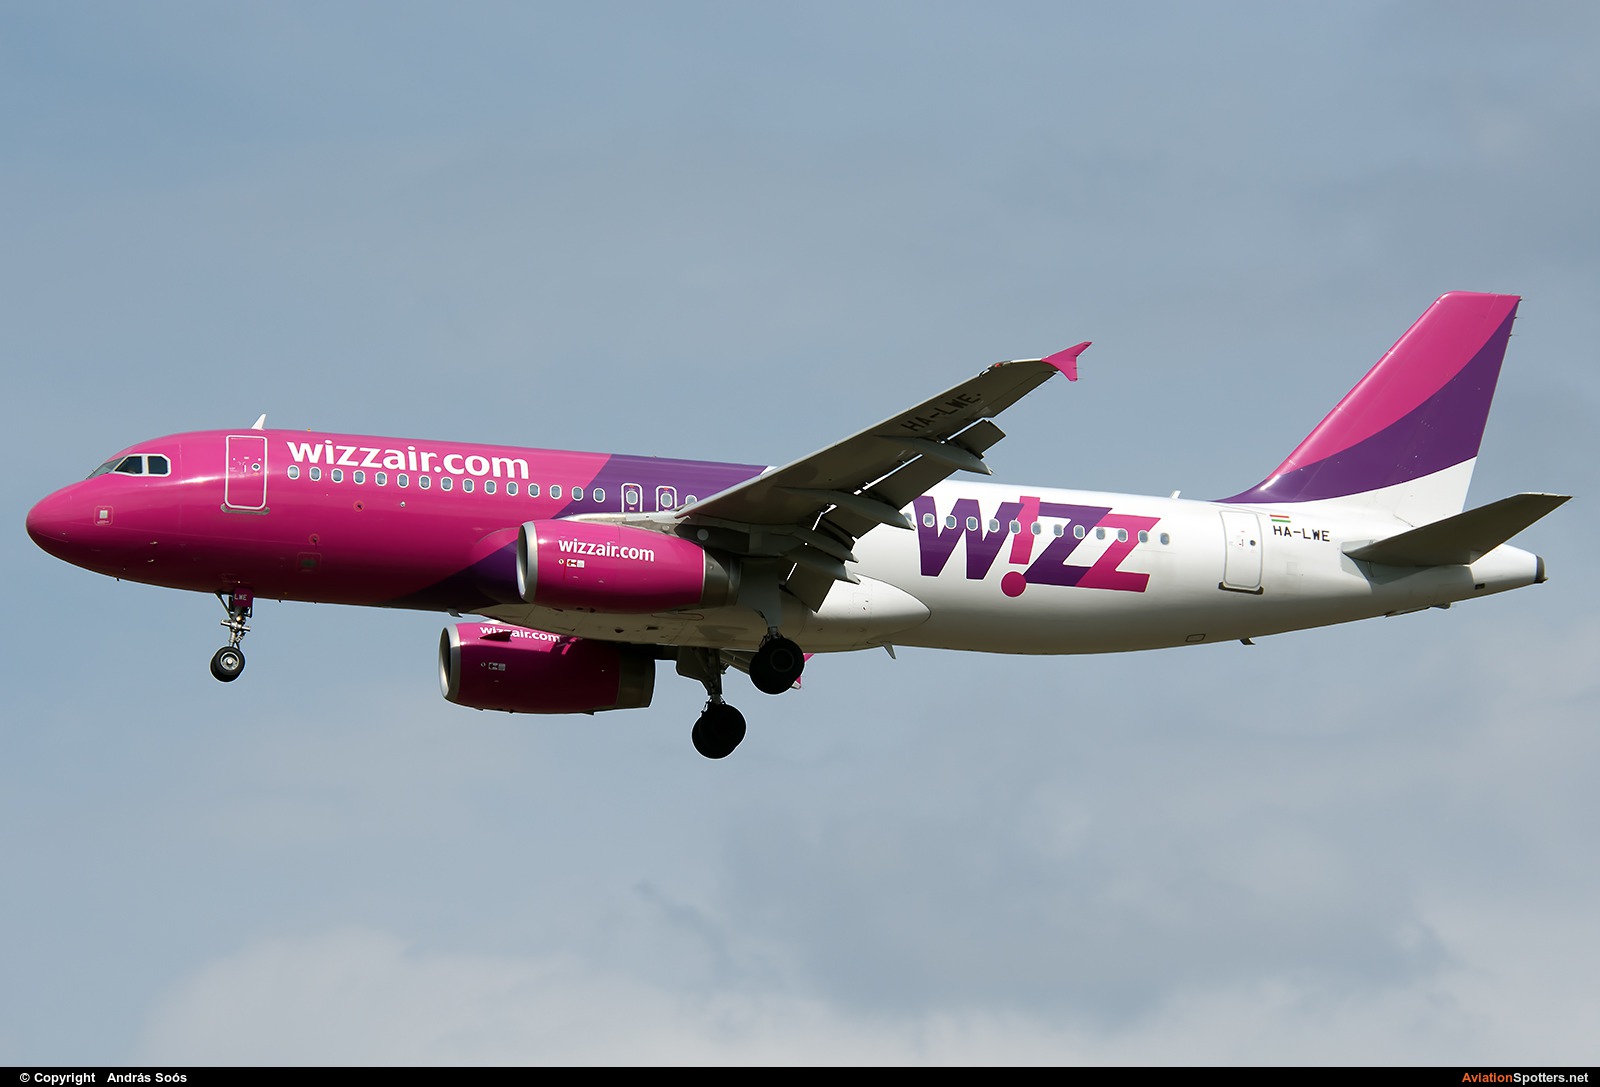 Wizz Air  -  A320  (HA-LWE) By András Soós (sas1965)